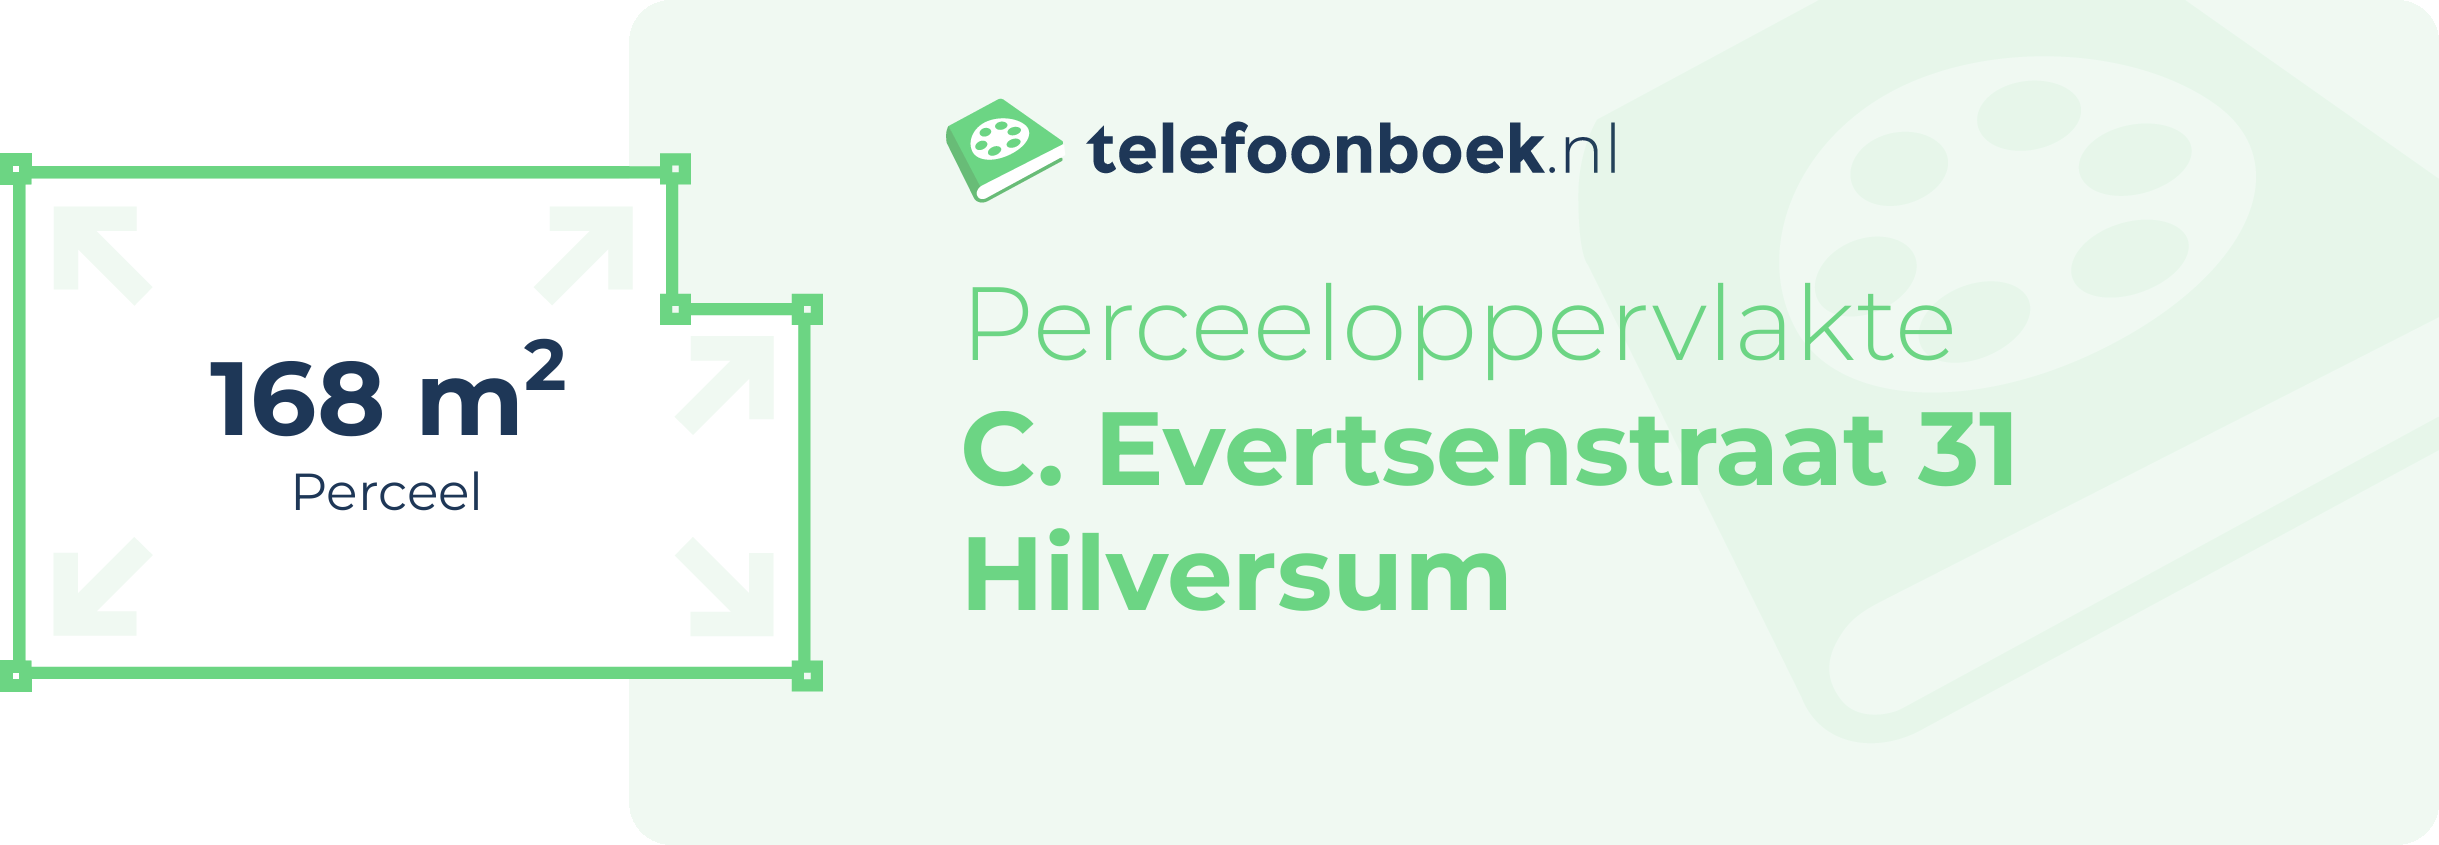 Perceeloppervlakte C. Evertsenstraat 31 Hilversum